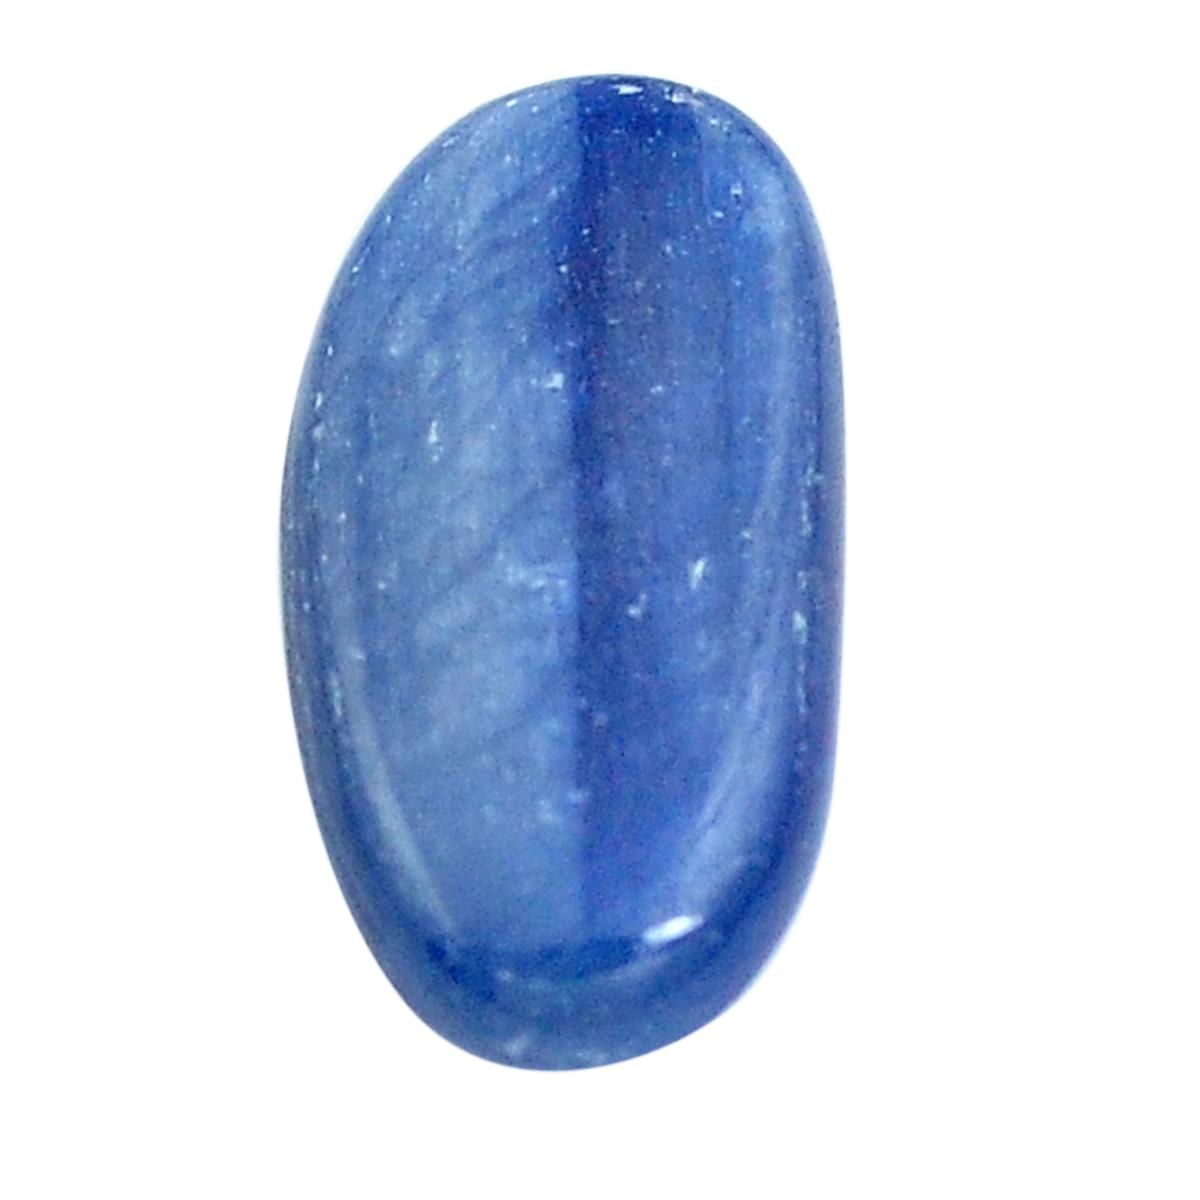 250 Cts Beautiful Blue lapis lazuli cabochon Loose Gemstone Lot